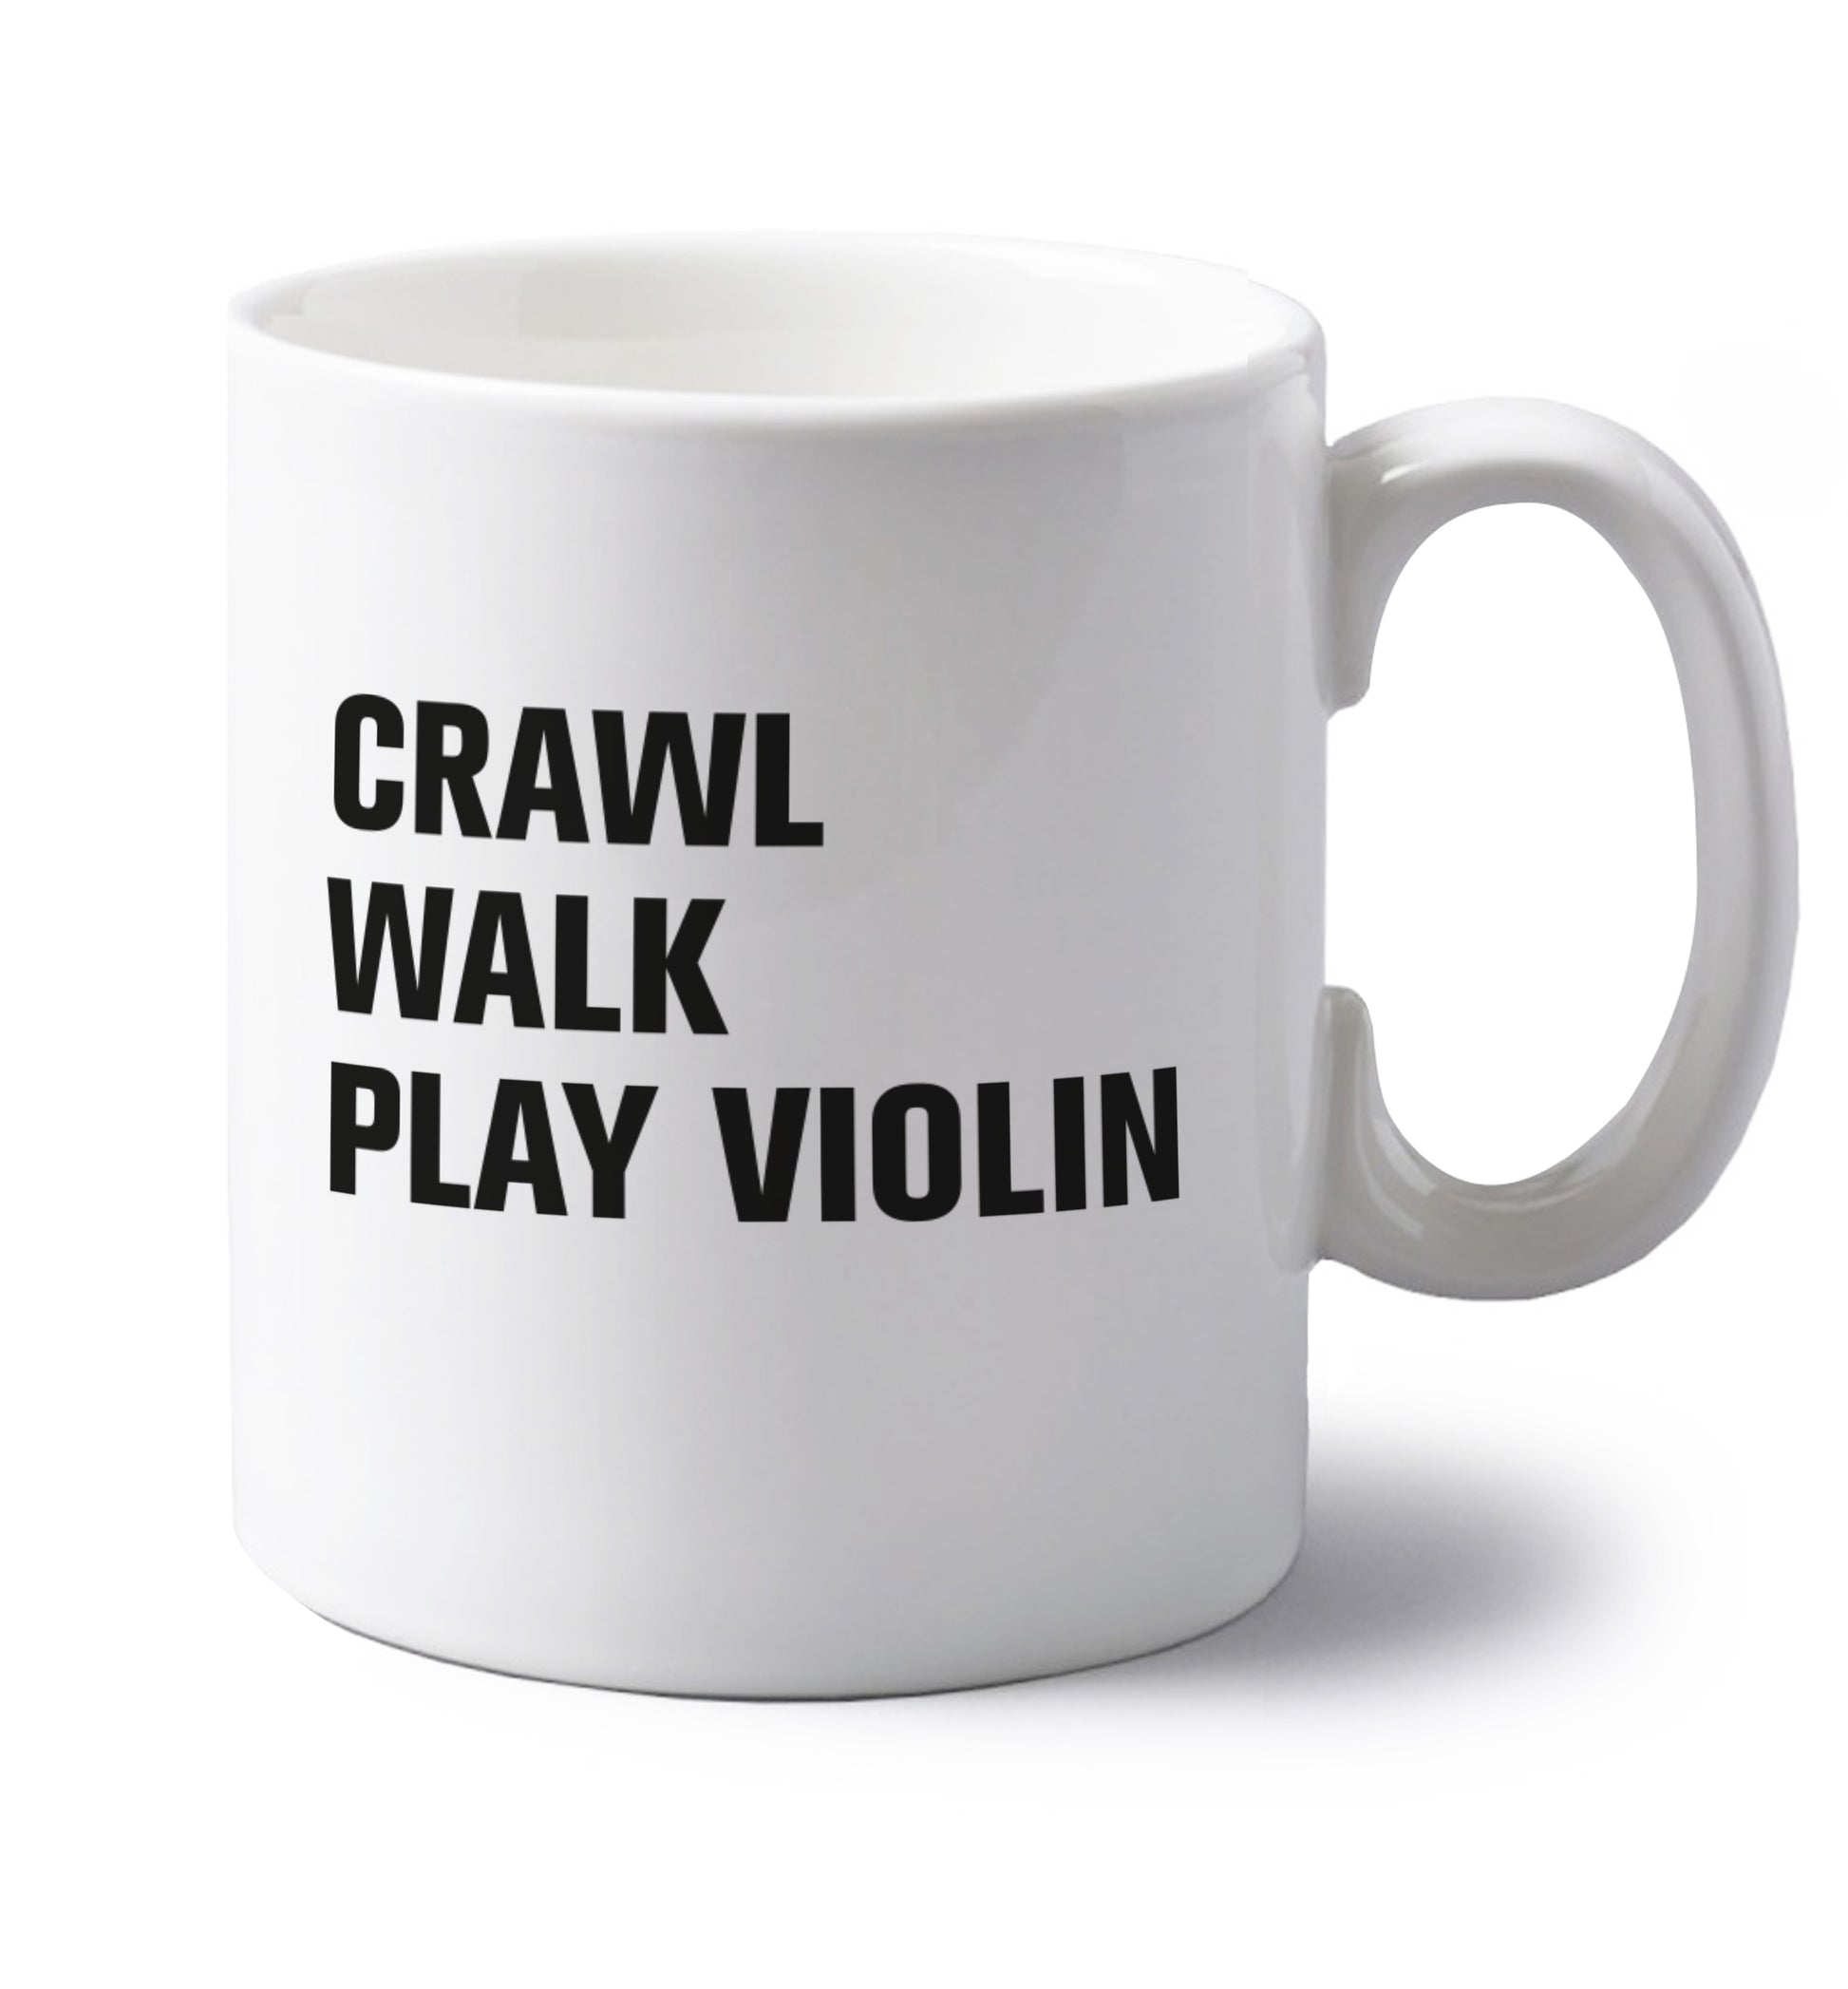 Crawl Walk Play Violin left handed white ceramic mug 